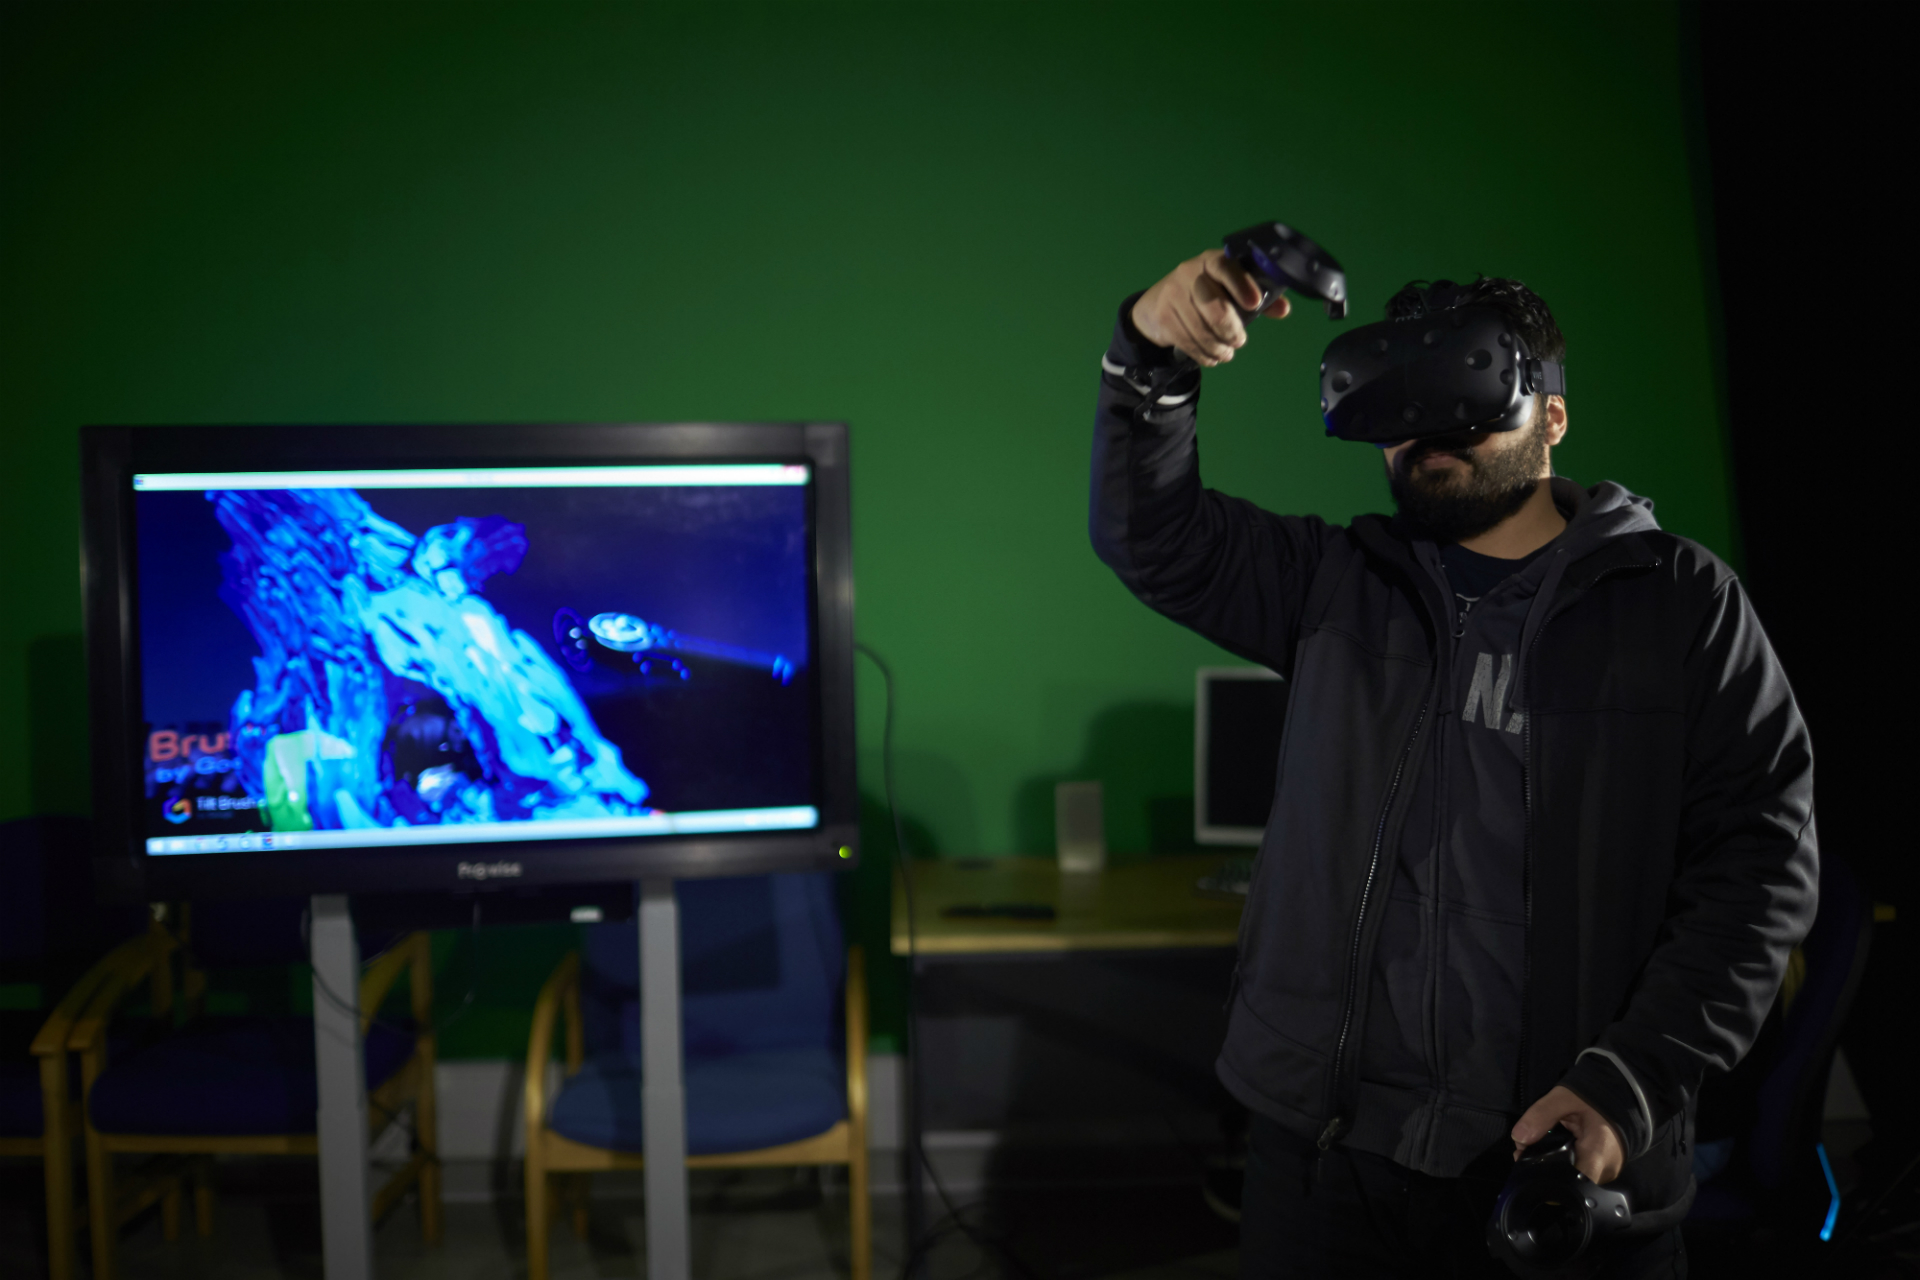 Male wearing Virtual Reality head - display screen in background